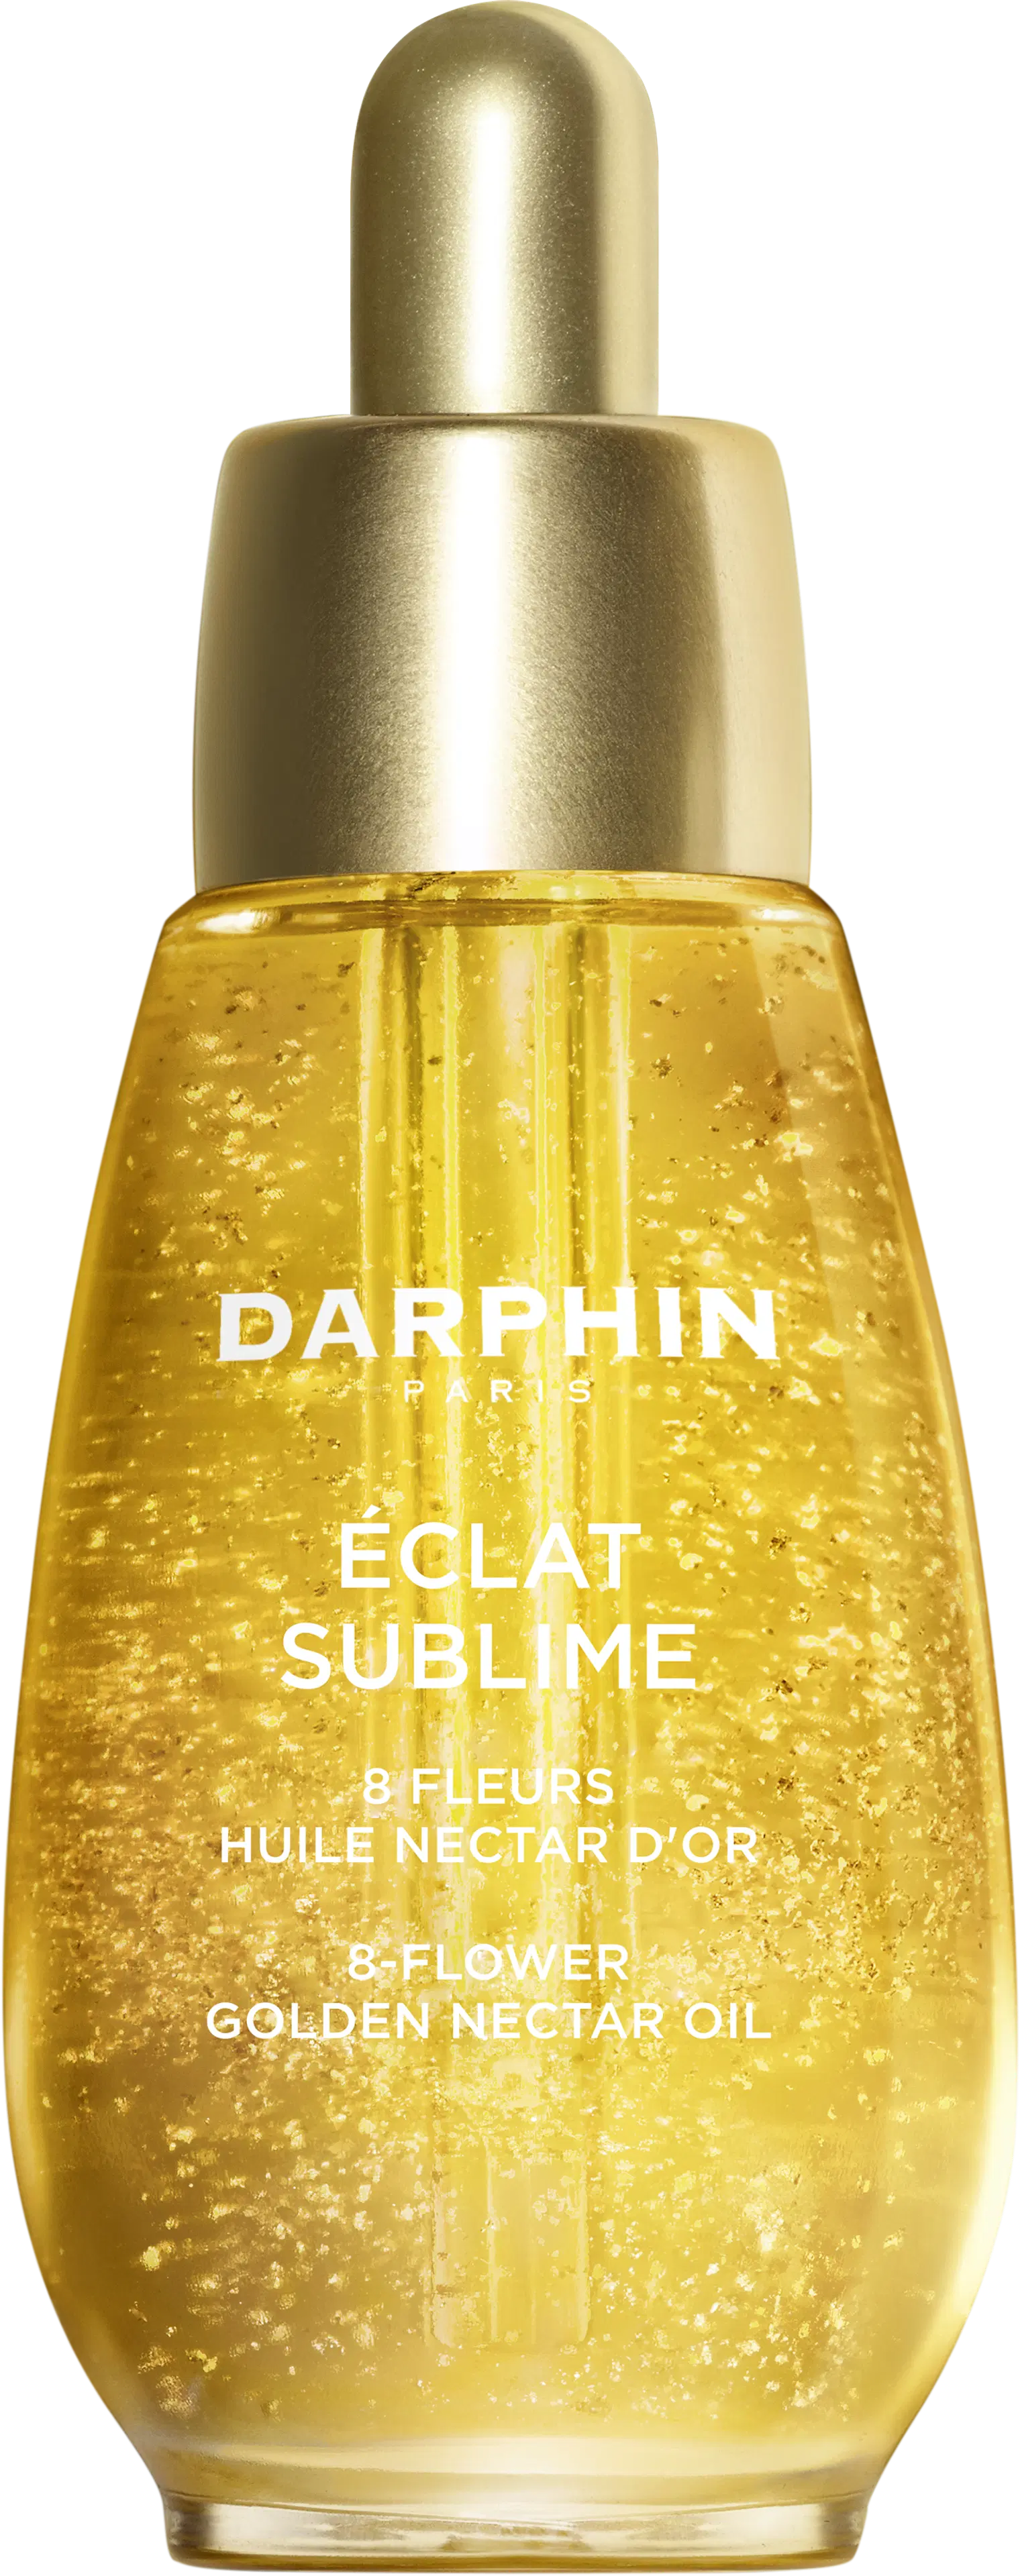 Darphin Eclat sublime 8-flower golden nectar hoitoöljy 30 ml